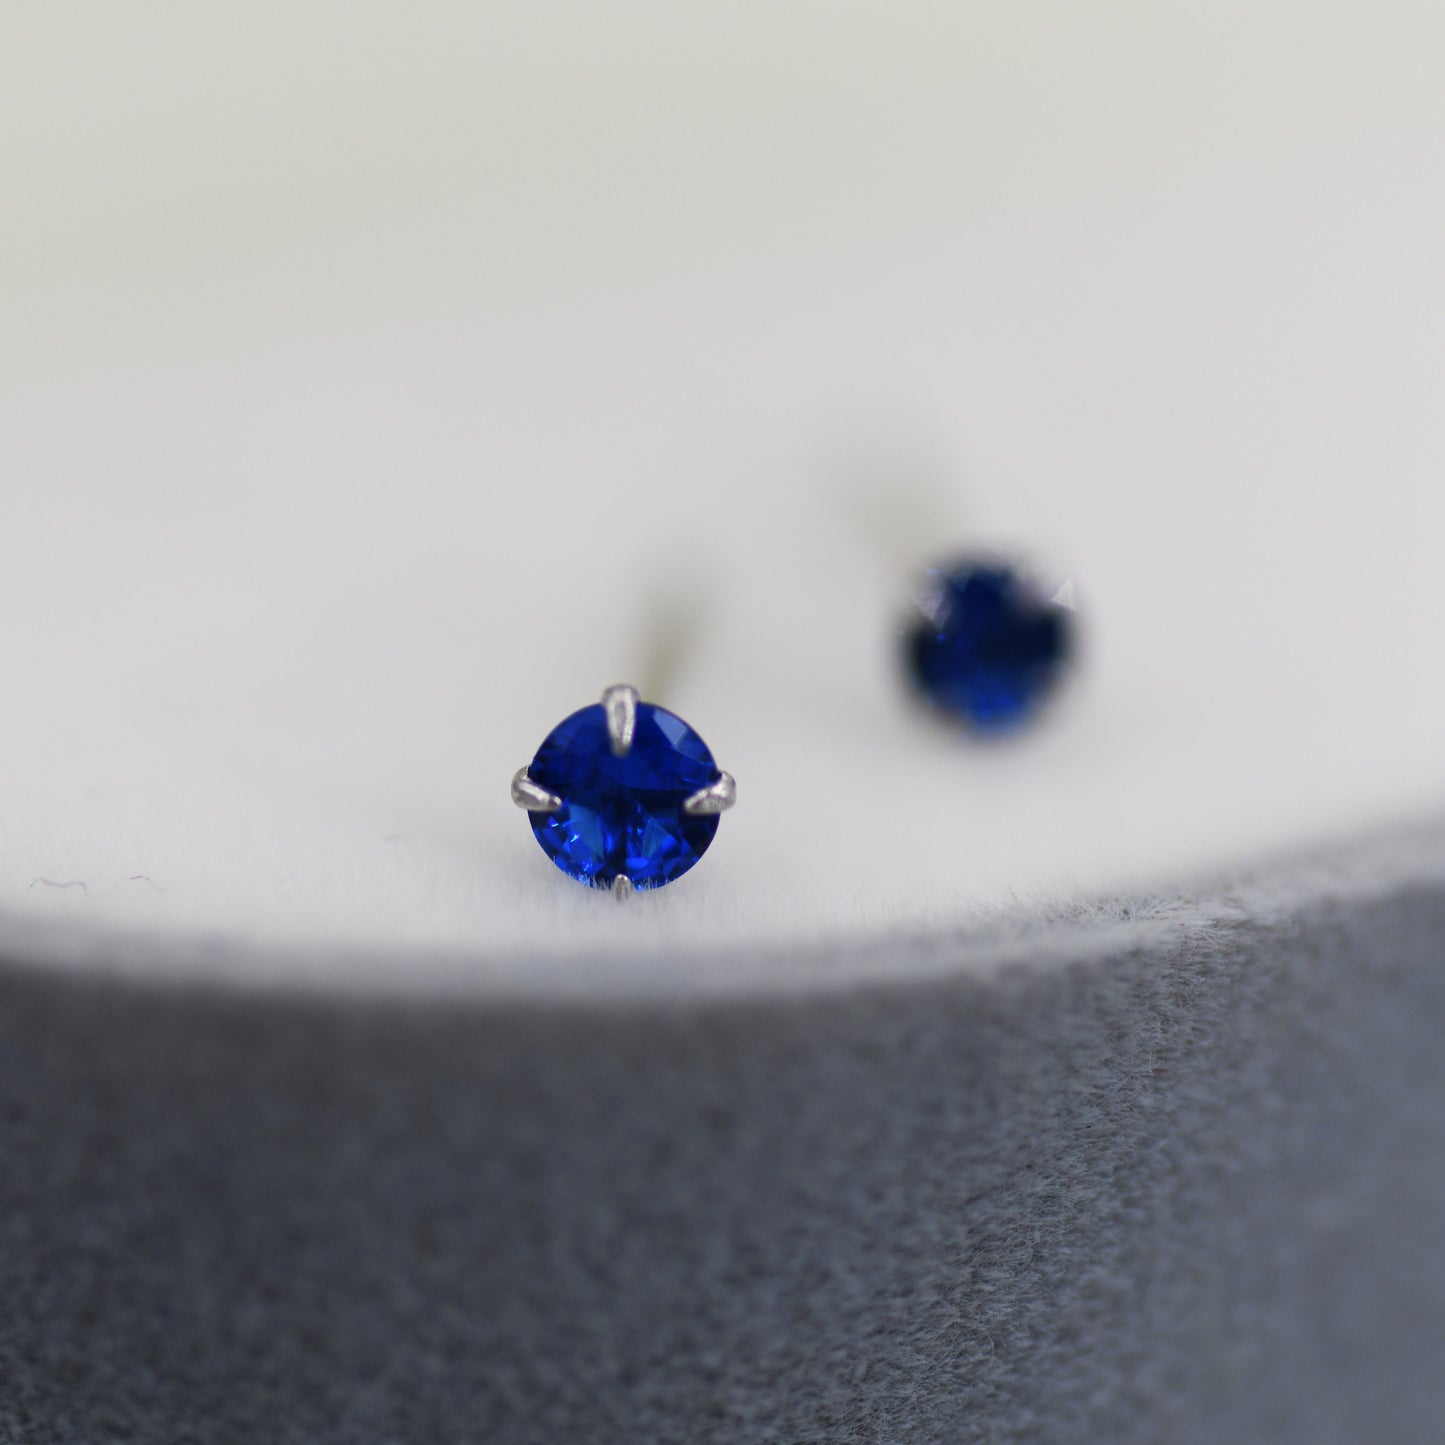 Sterling Silver September Birthstone Earrings, Sapphire Blue Stud Earrings, Extra Tiny Crystal Stud, 3mm Birthstone CZ Earrings